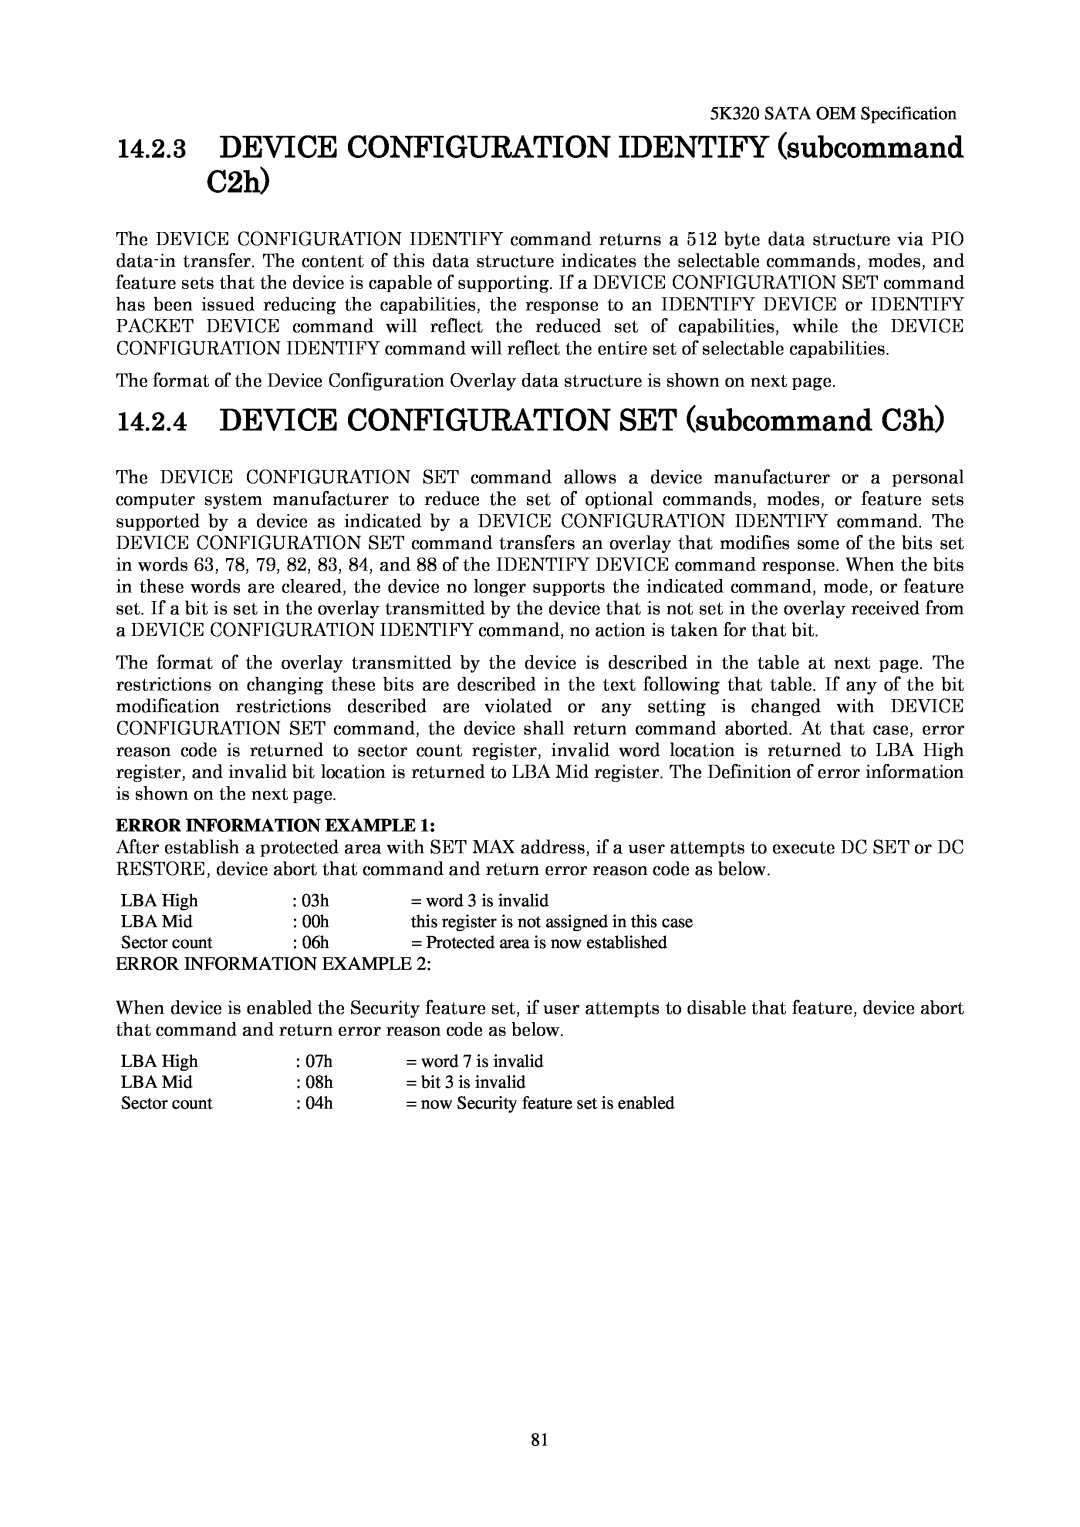 Hitachi HTS543216L9SA00, HTS543232L9A300 manual 14.2.4DEVICE CONFIGURATION SET subcommand C3h, Error Information Example 